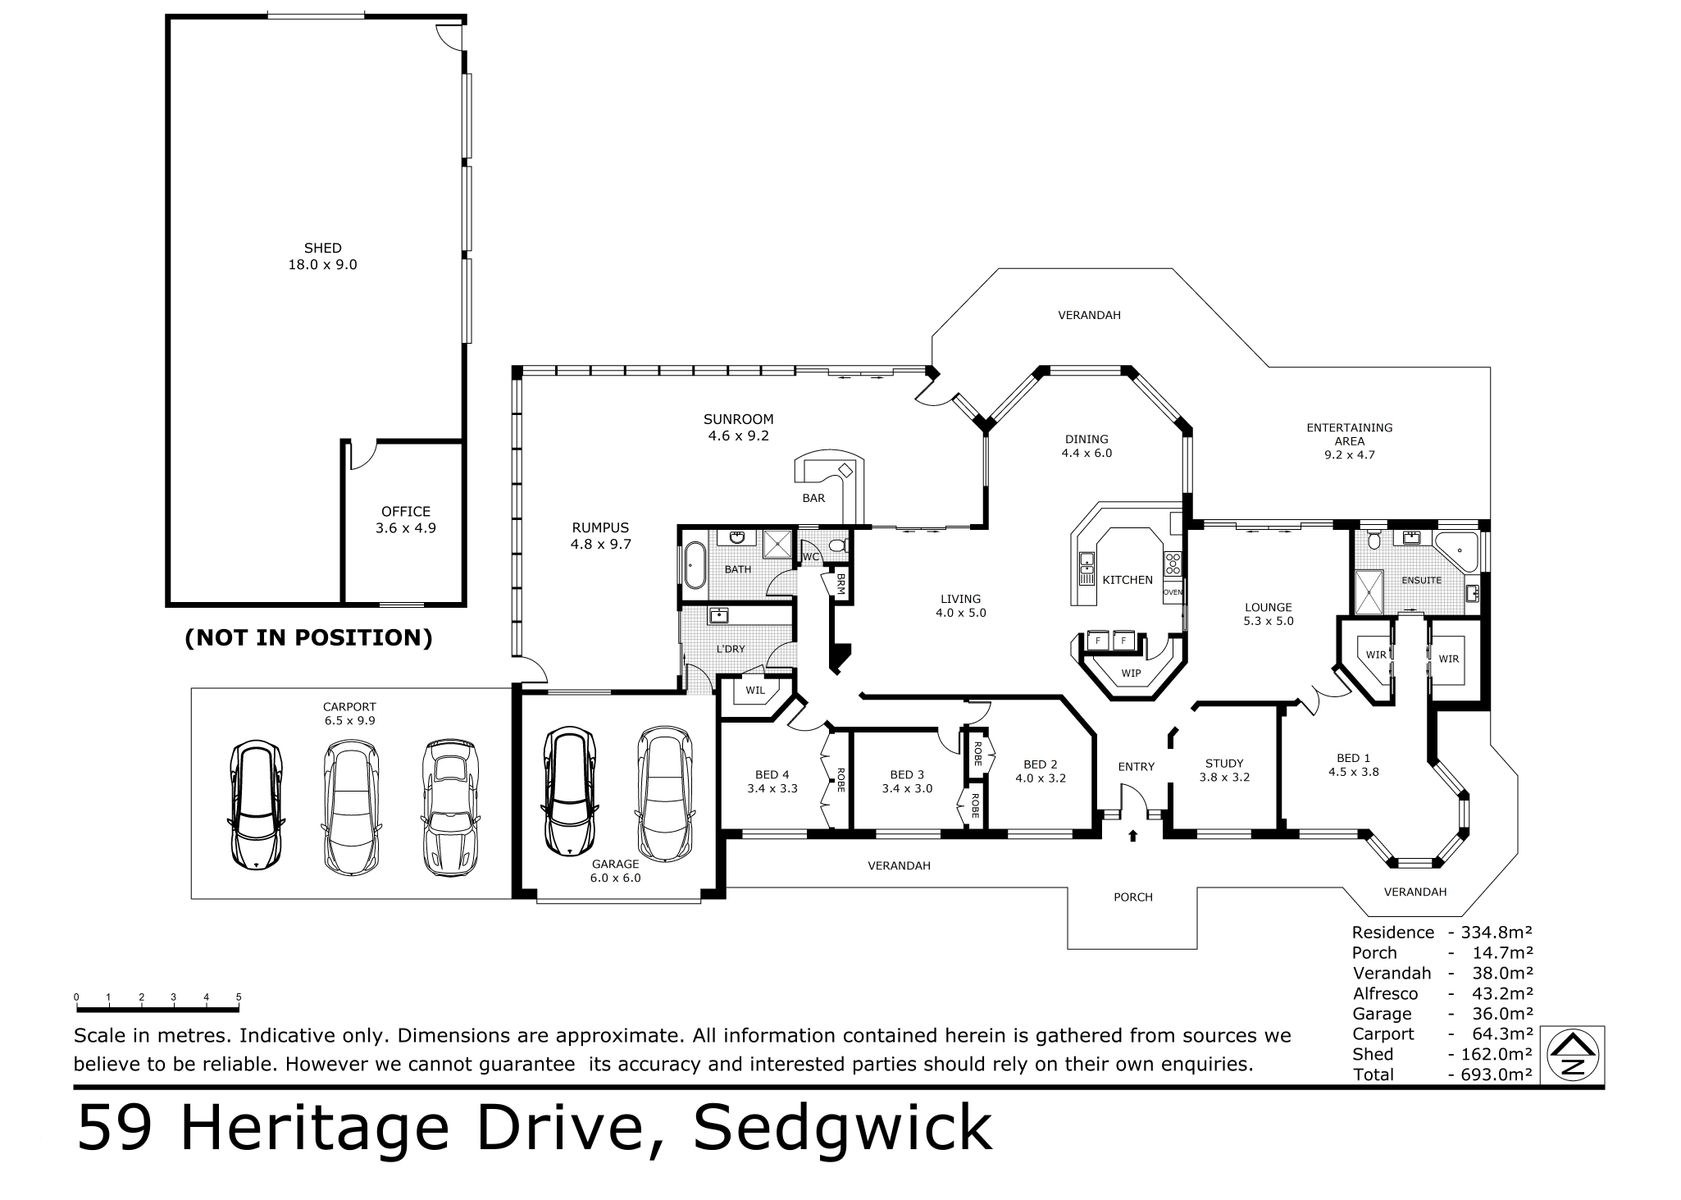 59 Heritage Drive Sedgwick HiRes 1